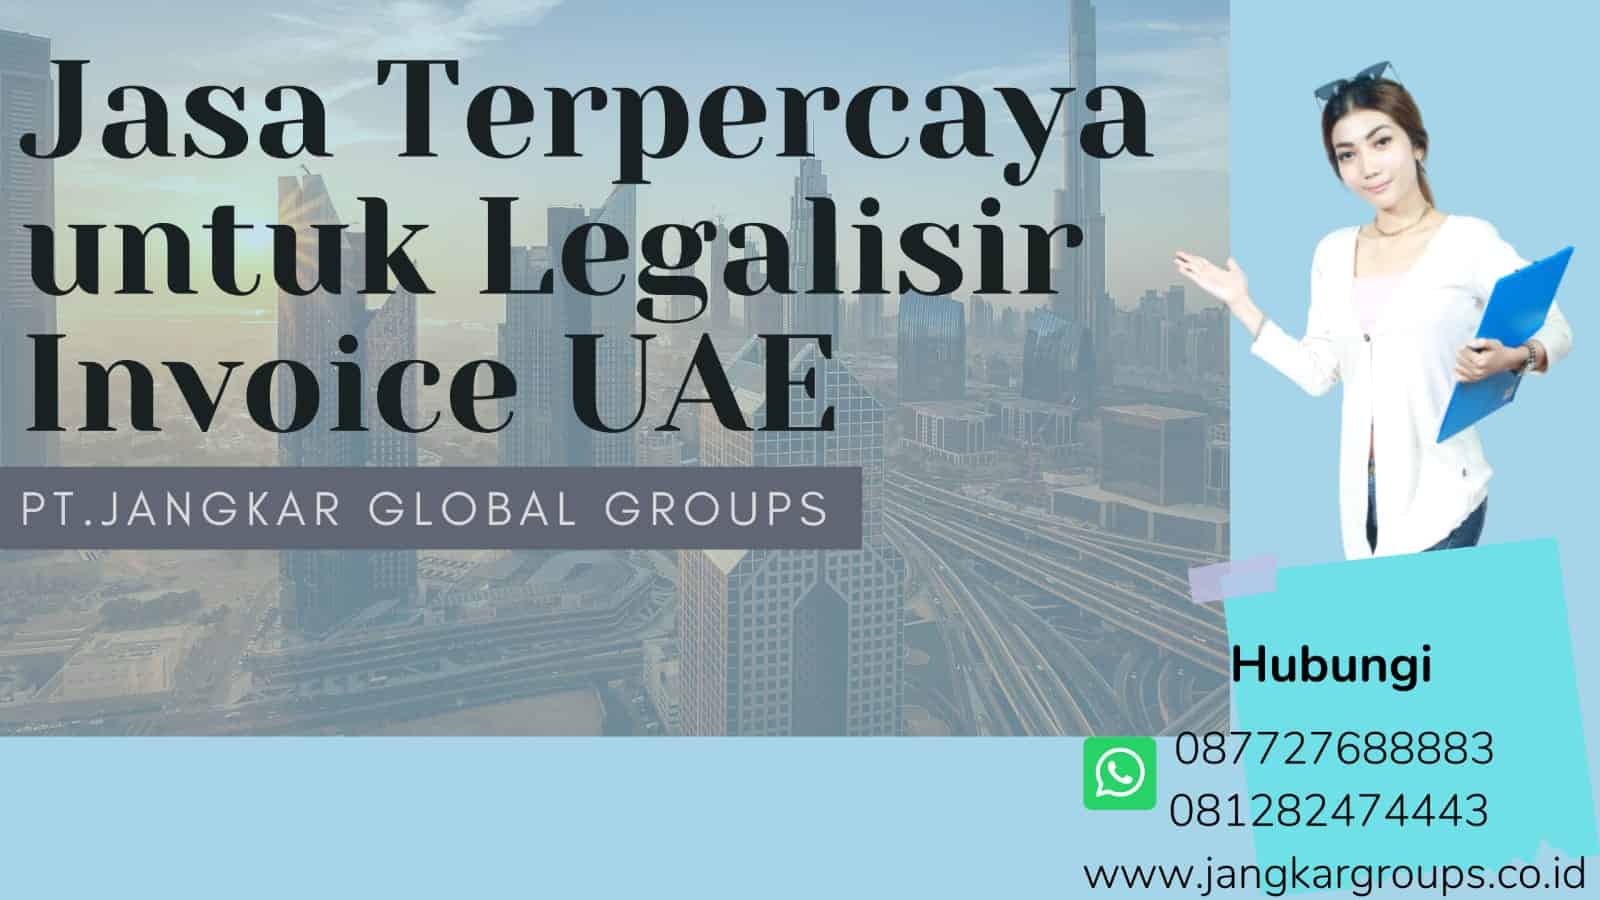 Jasa Terpercaya untuk Legalisir Invoice UAE